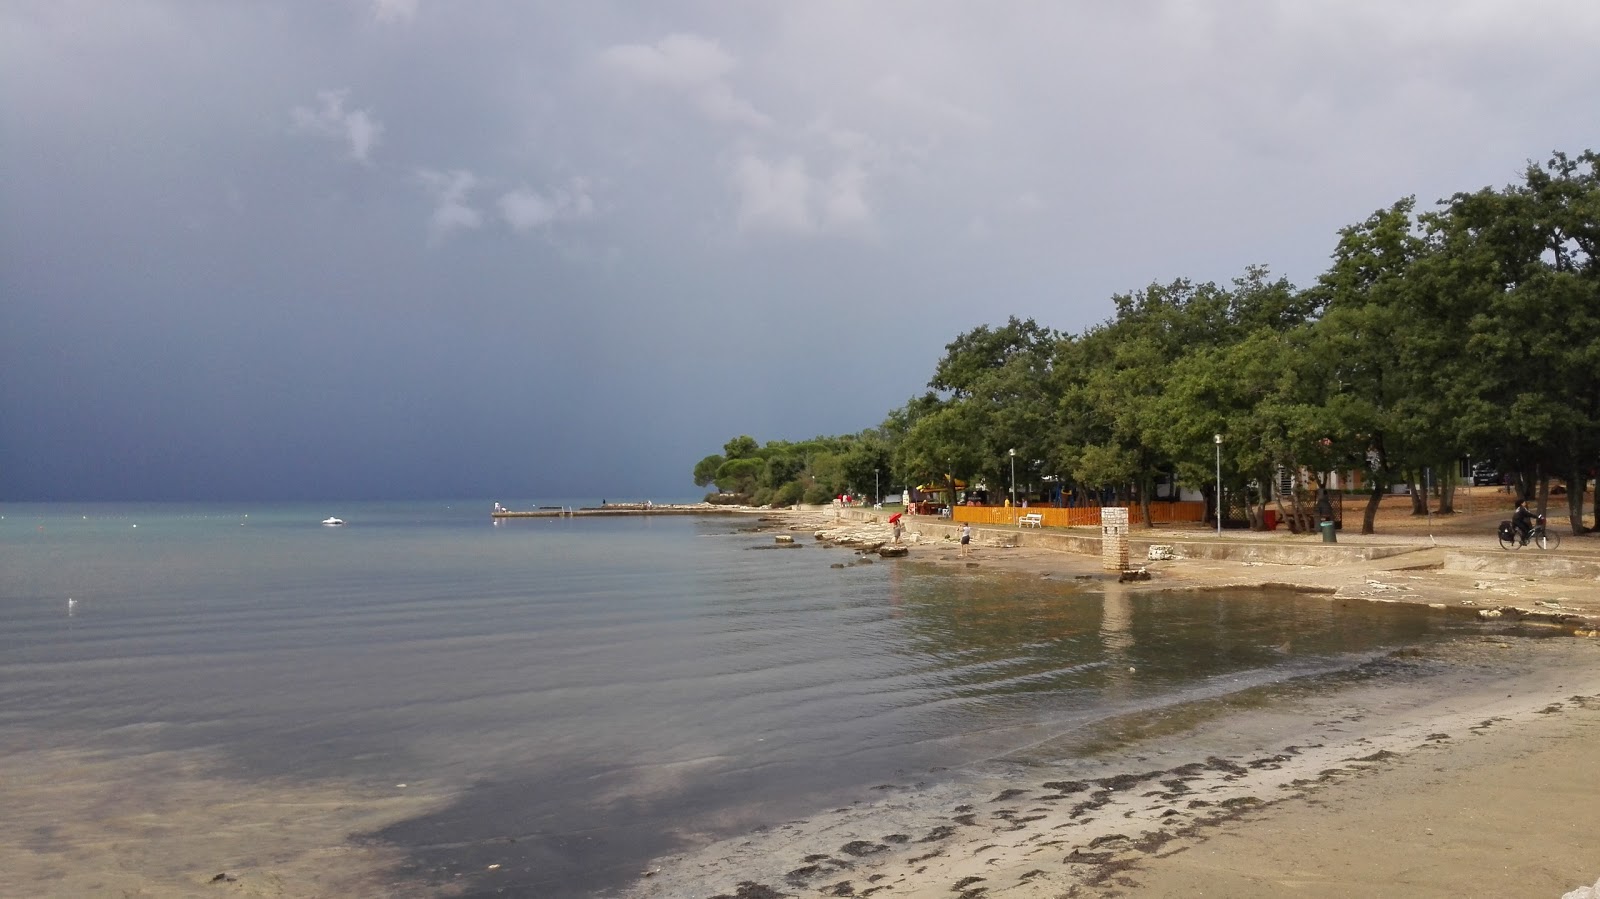 Foto de Potocina beach - lugar popular entre os apreciadores de relaxamento